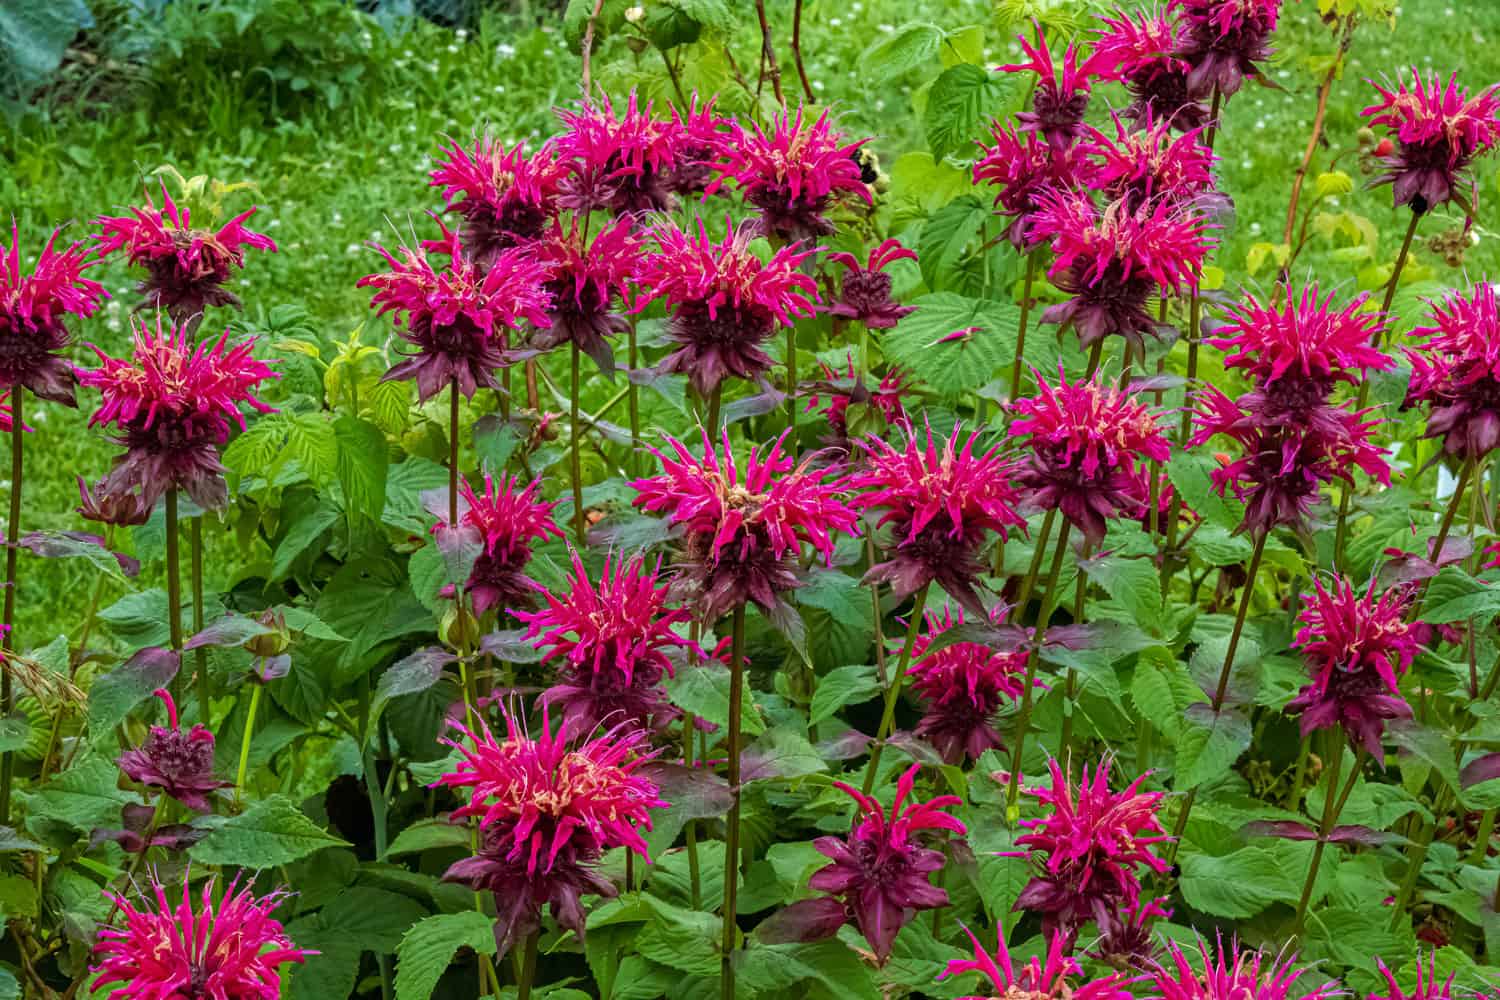 Dark maroon petal colors of a bee balm plant